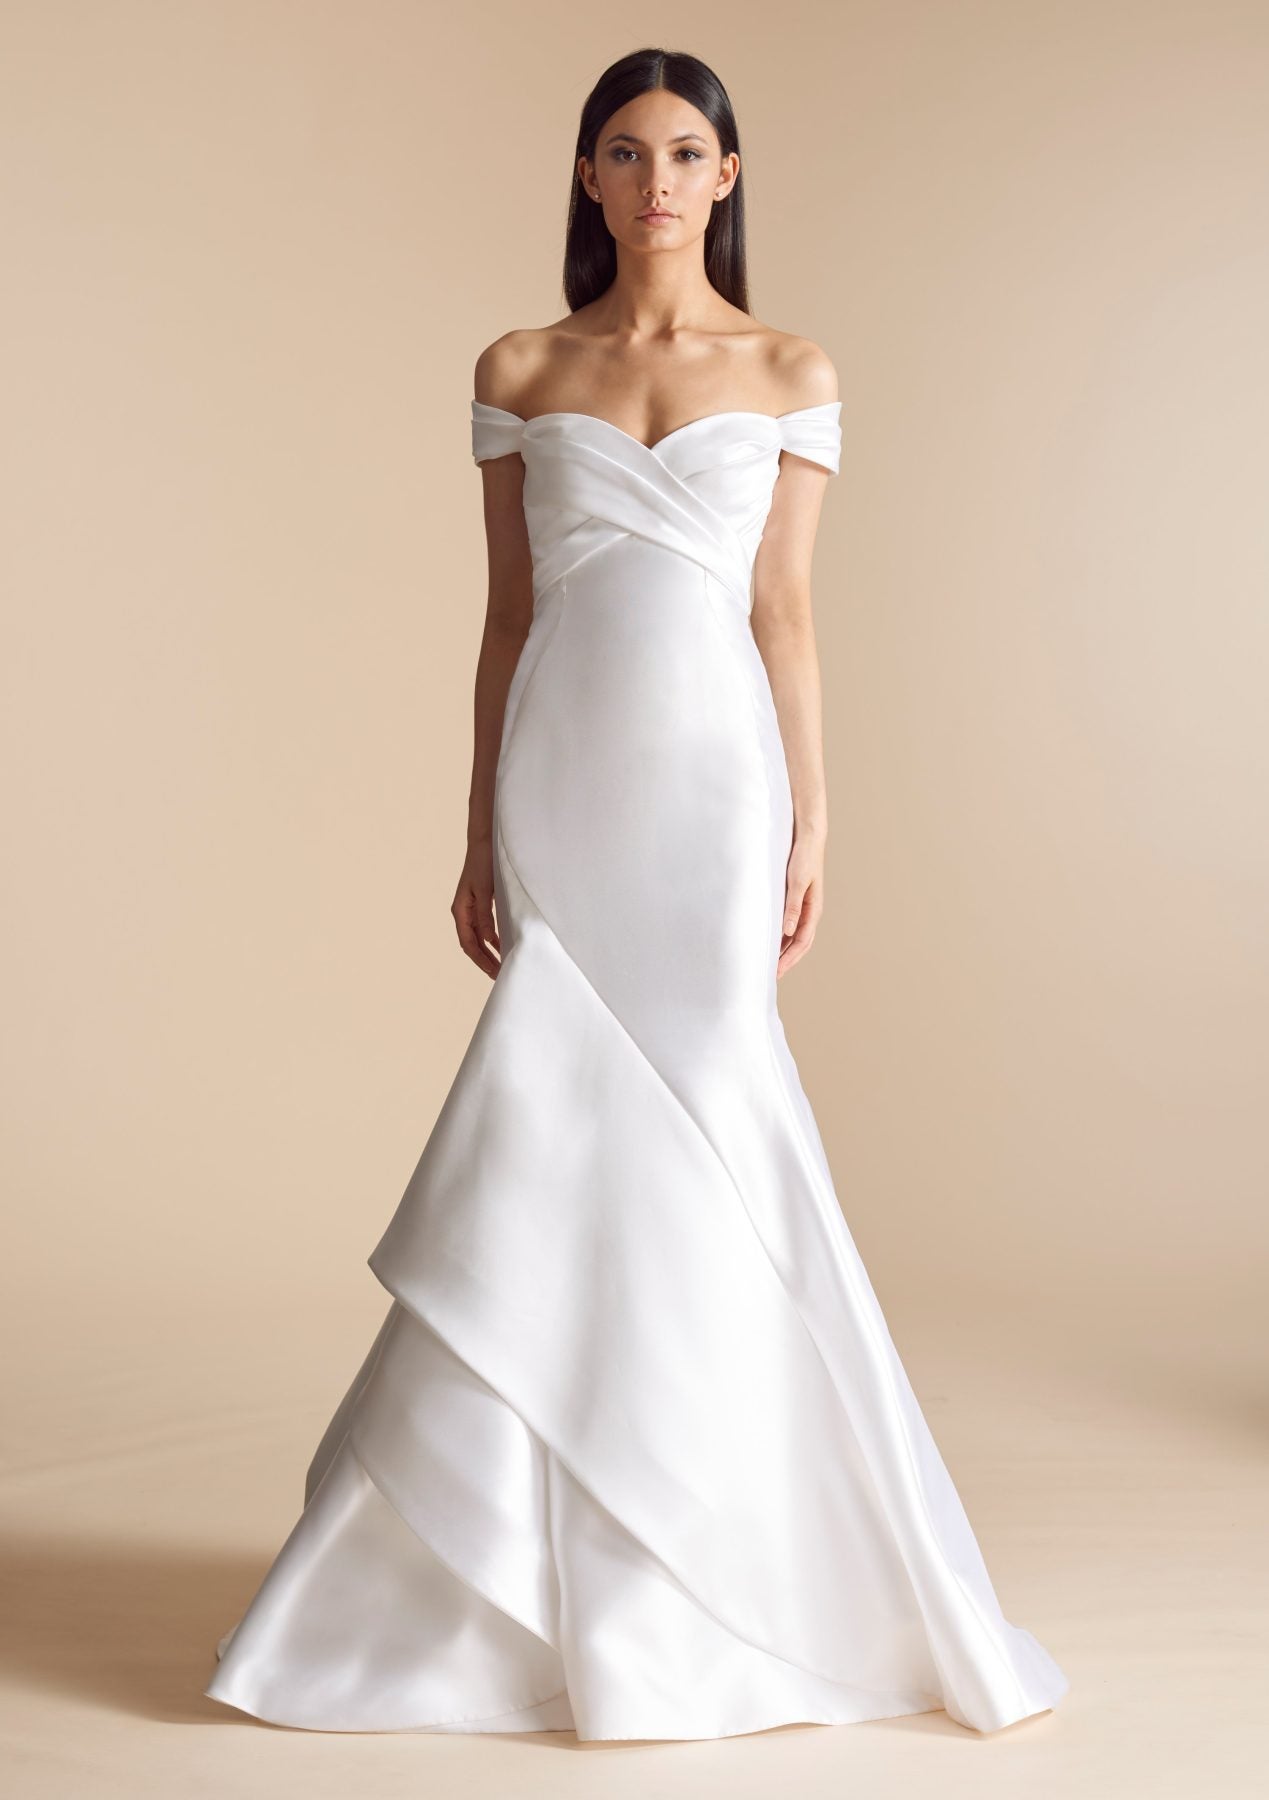 allison-webb-off-the-shoulder-ruched-bodice-and-modern-ruffled-skirt-wedding-dress-33834680-1269x1800.jpg